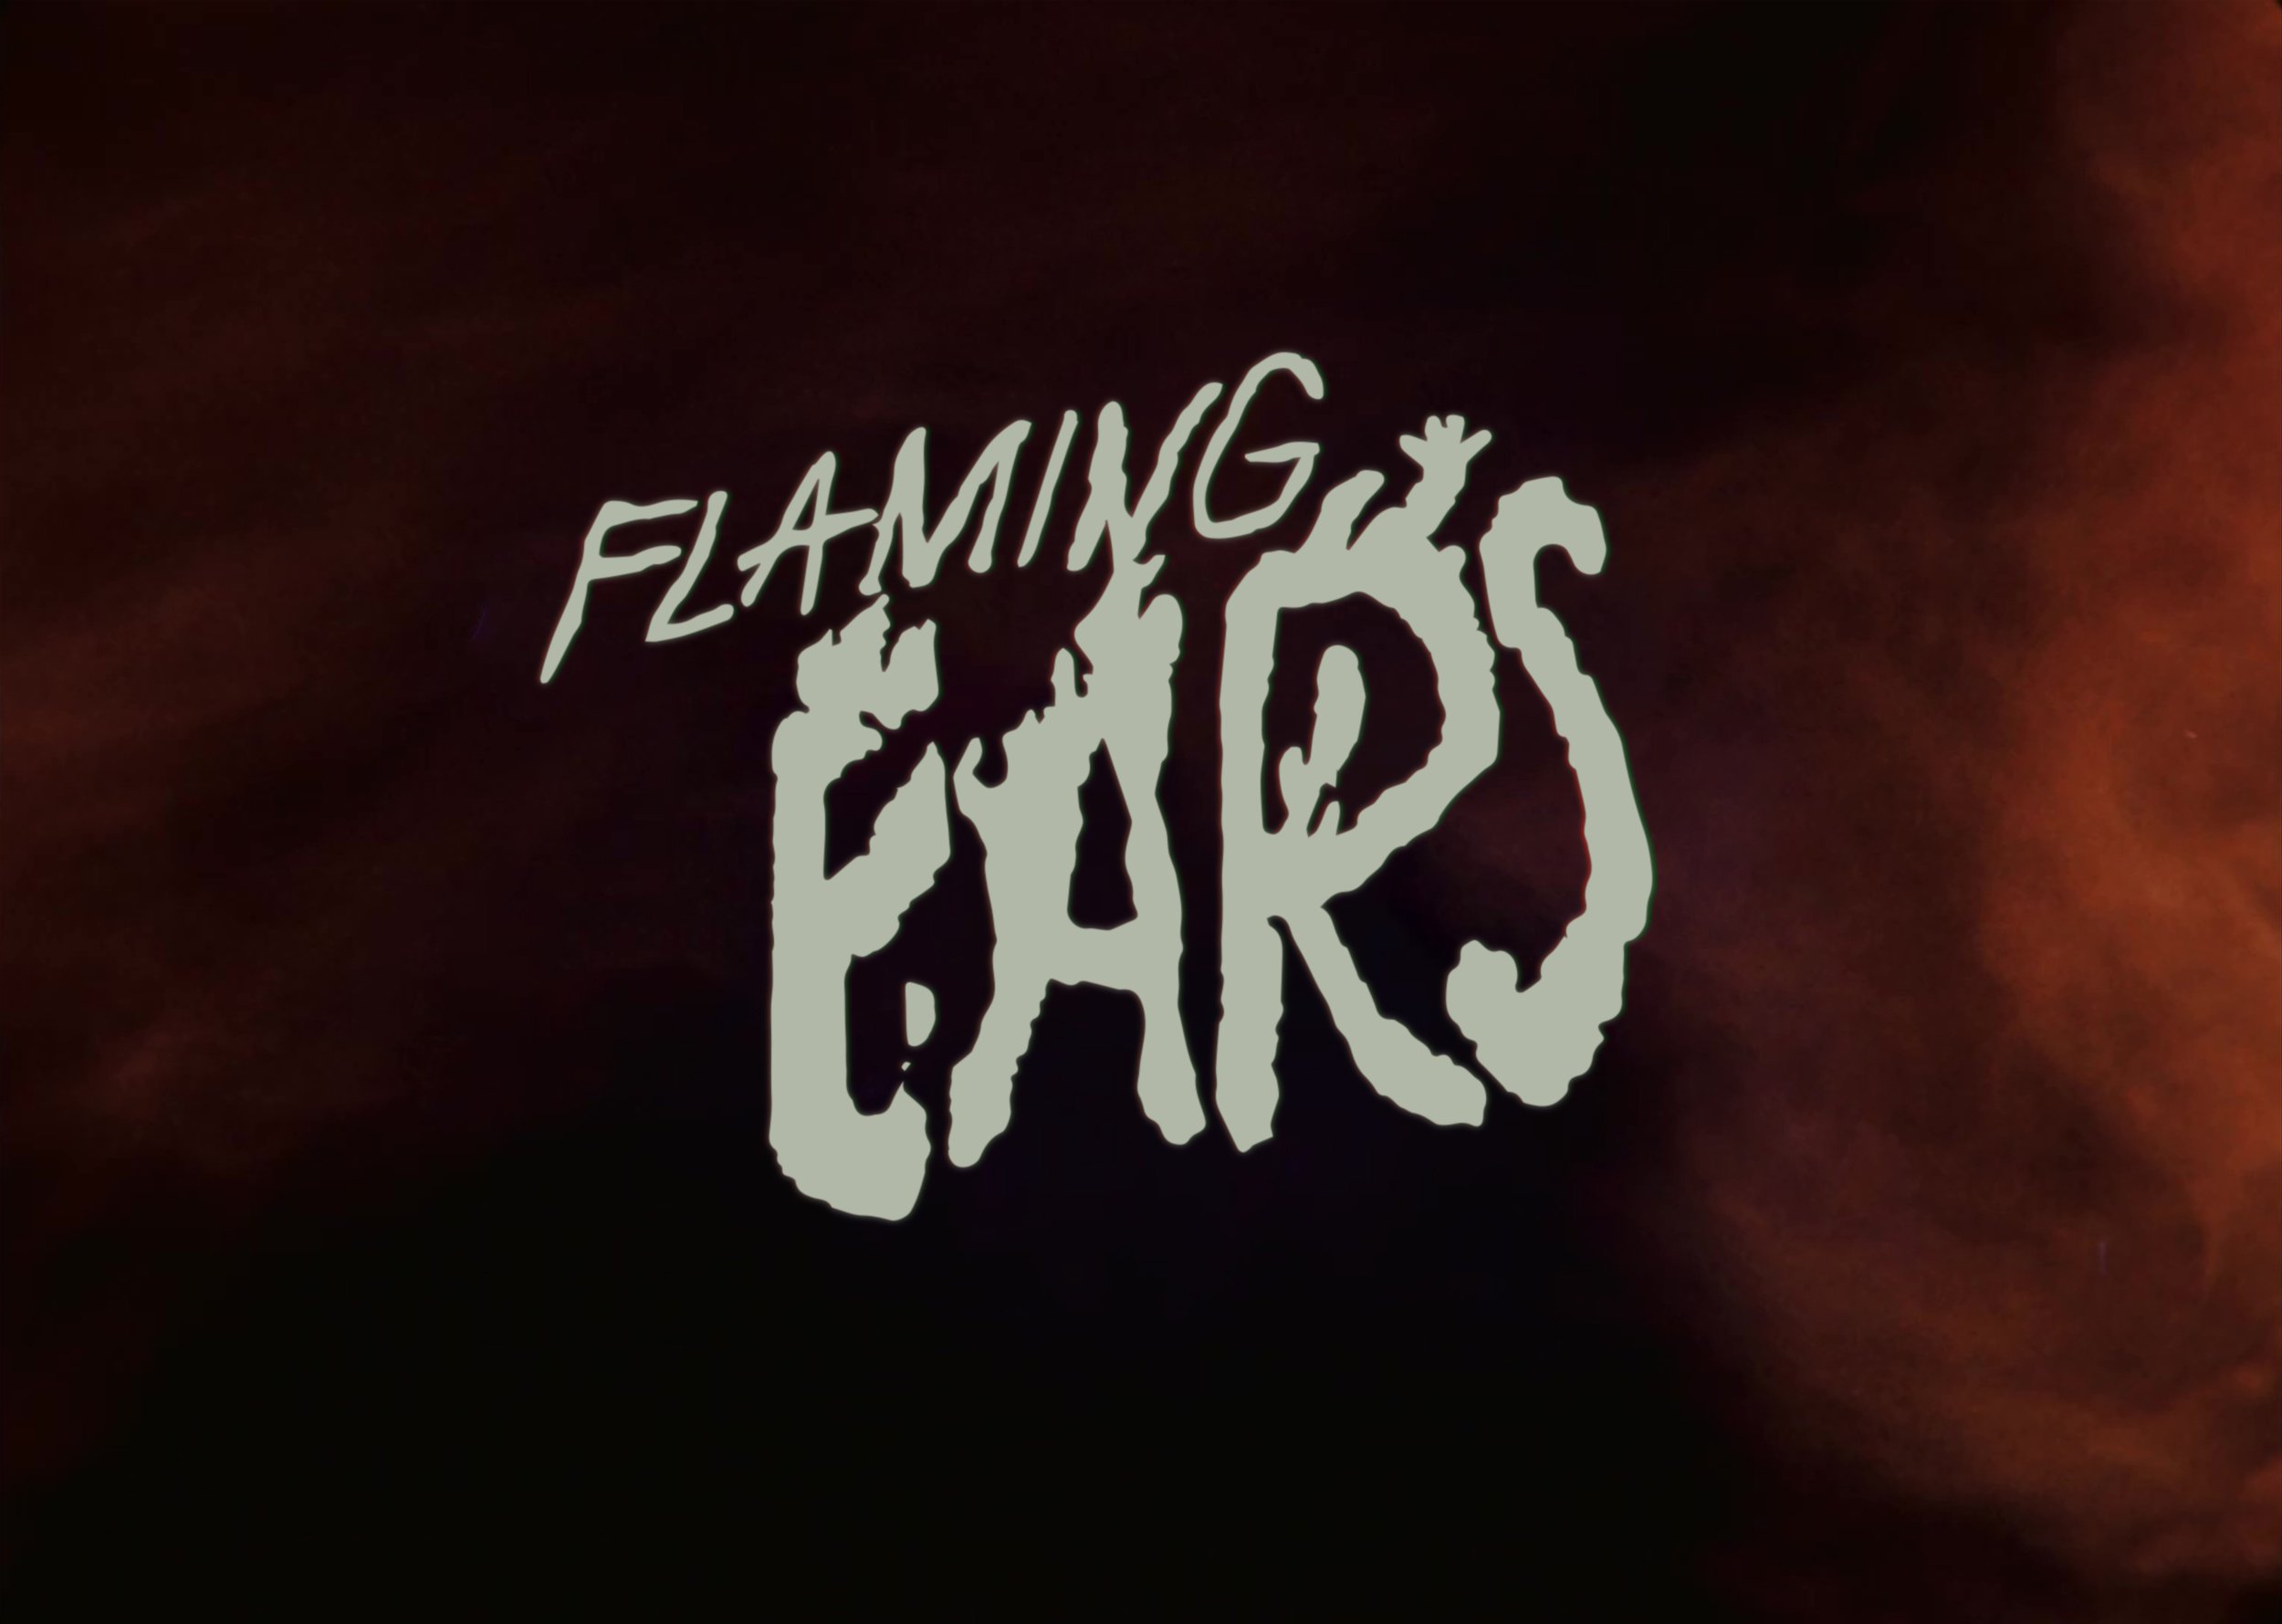 flaming-ears_title-treatment.jpg